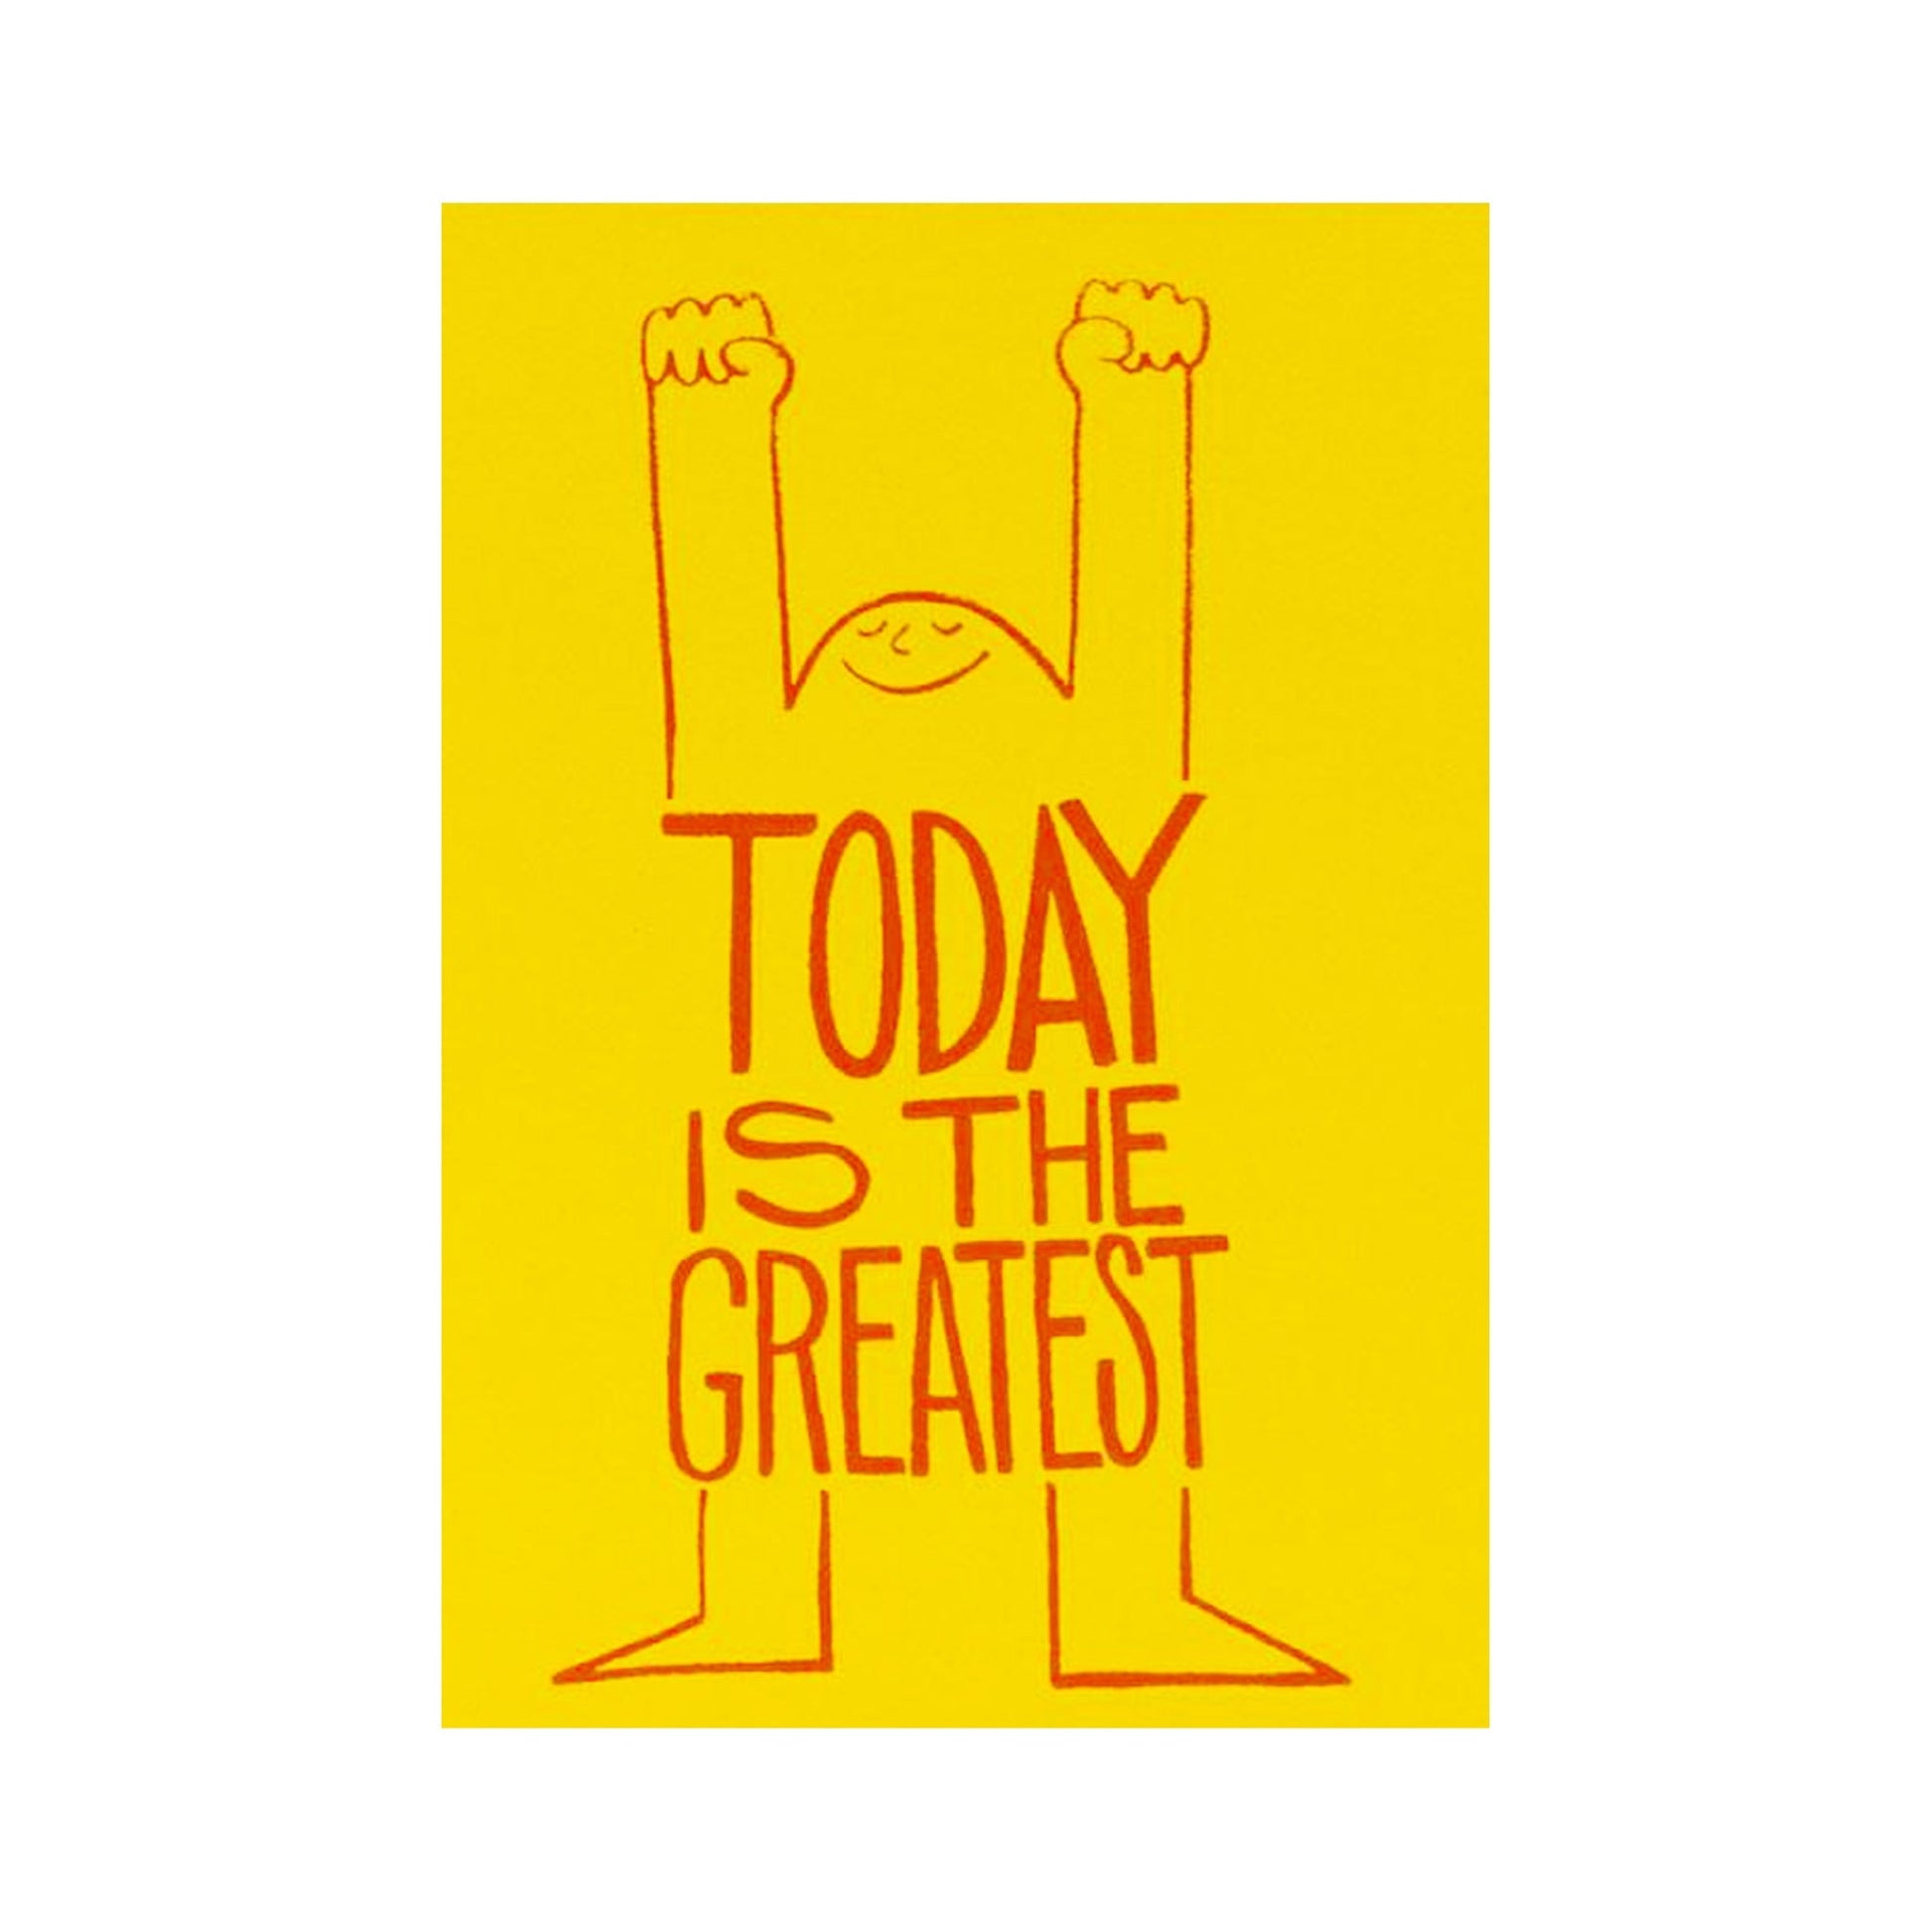 Postkarte "Today is the Greatest" - Vandeley